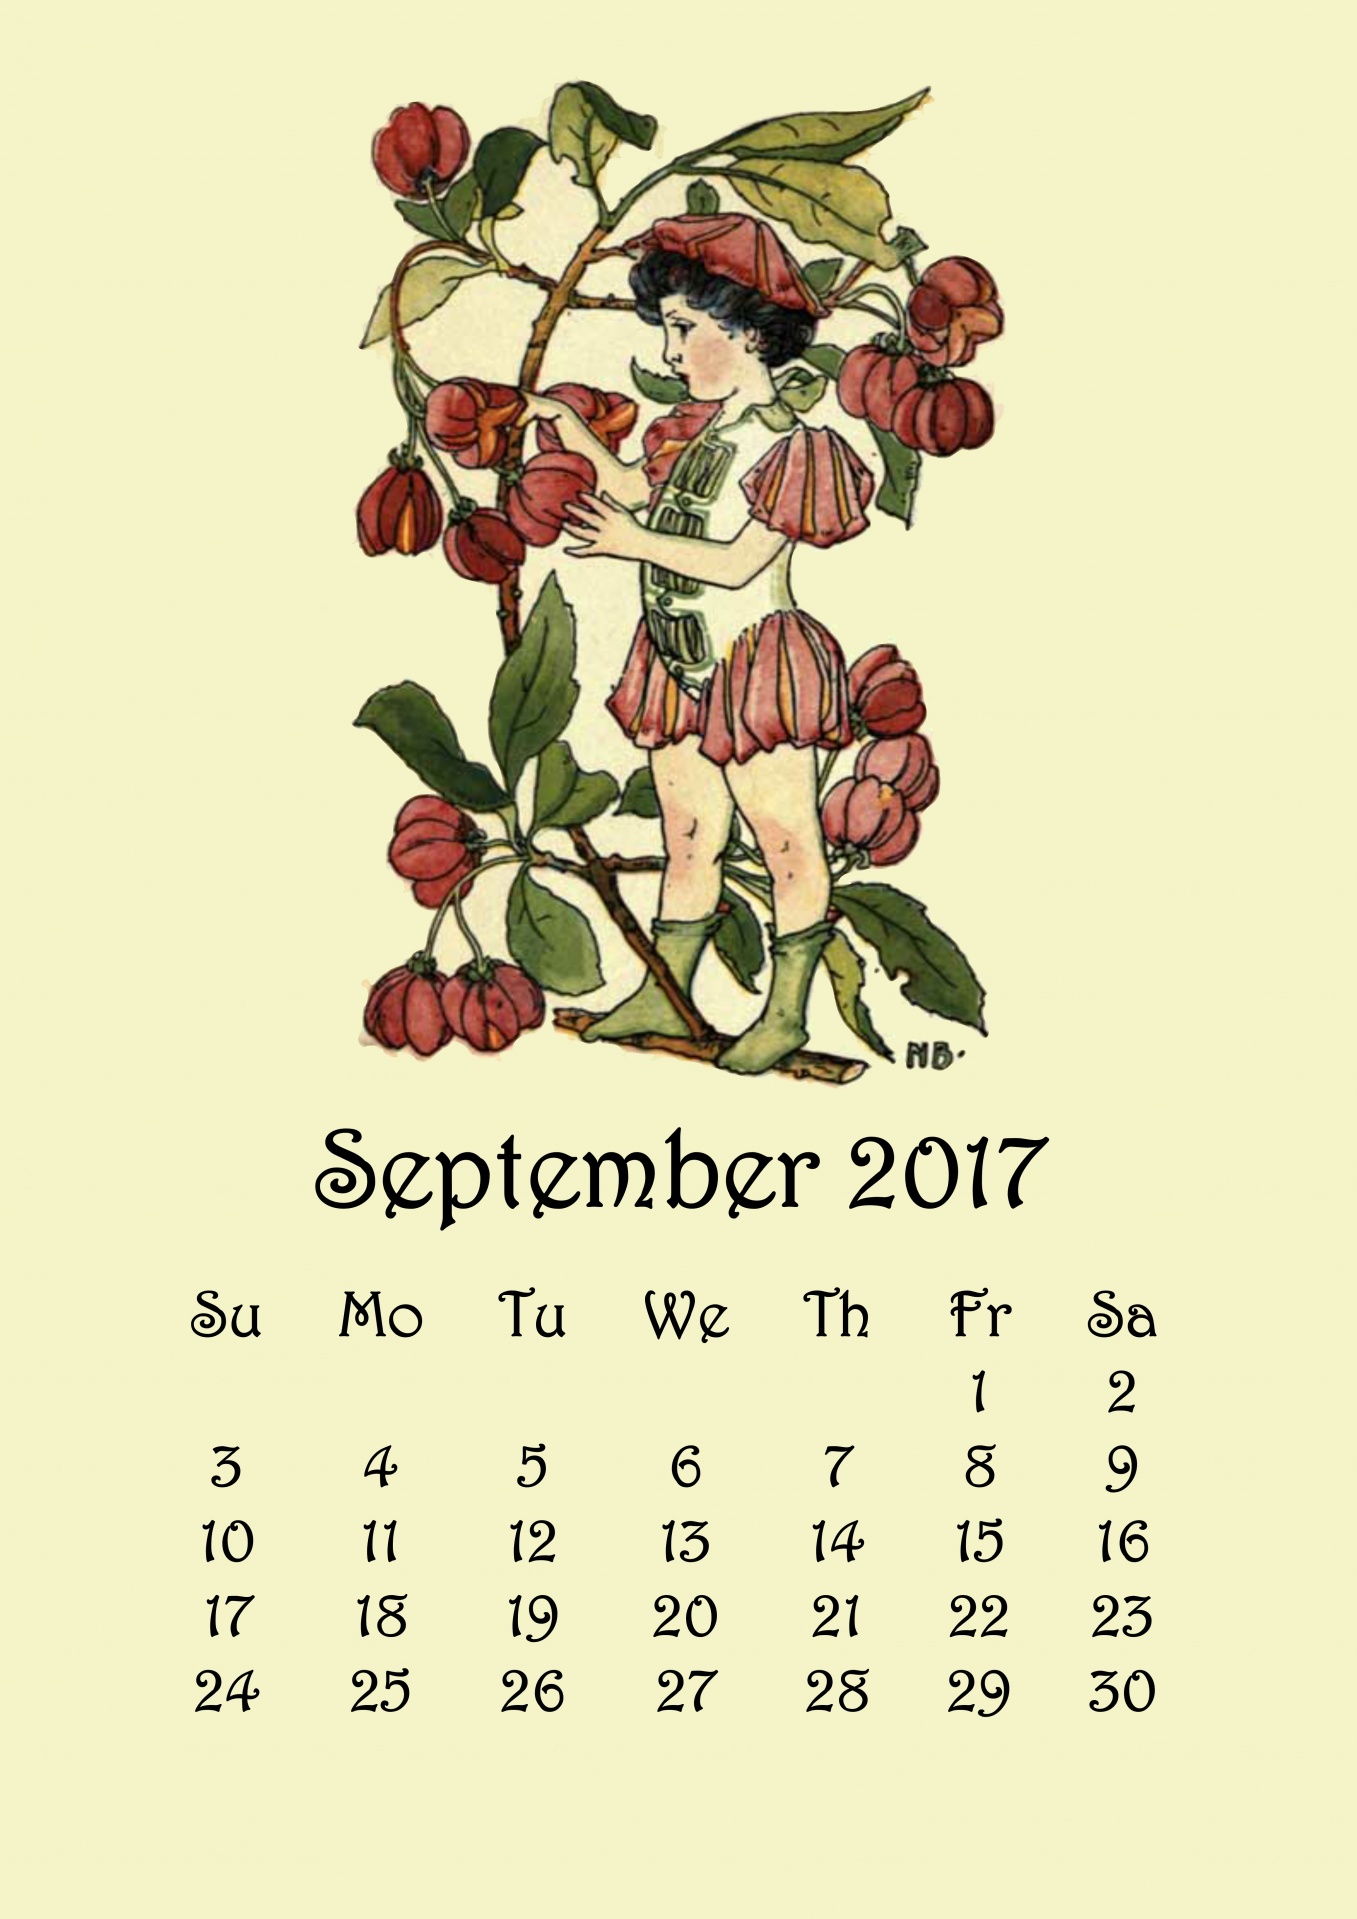 Liepa,  2017,  Kalendorius,  Fėja,  Gėlė,  Nellie & Nbsp,  Benson,  Ruduo,  Filialas,  Vintage